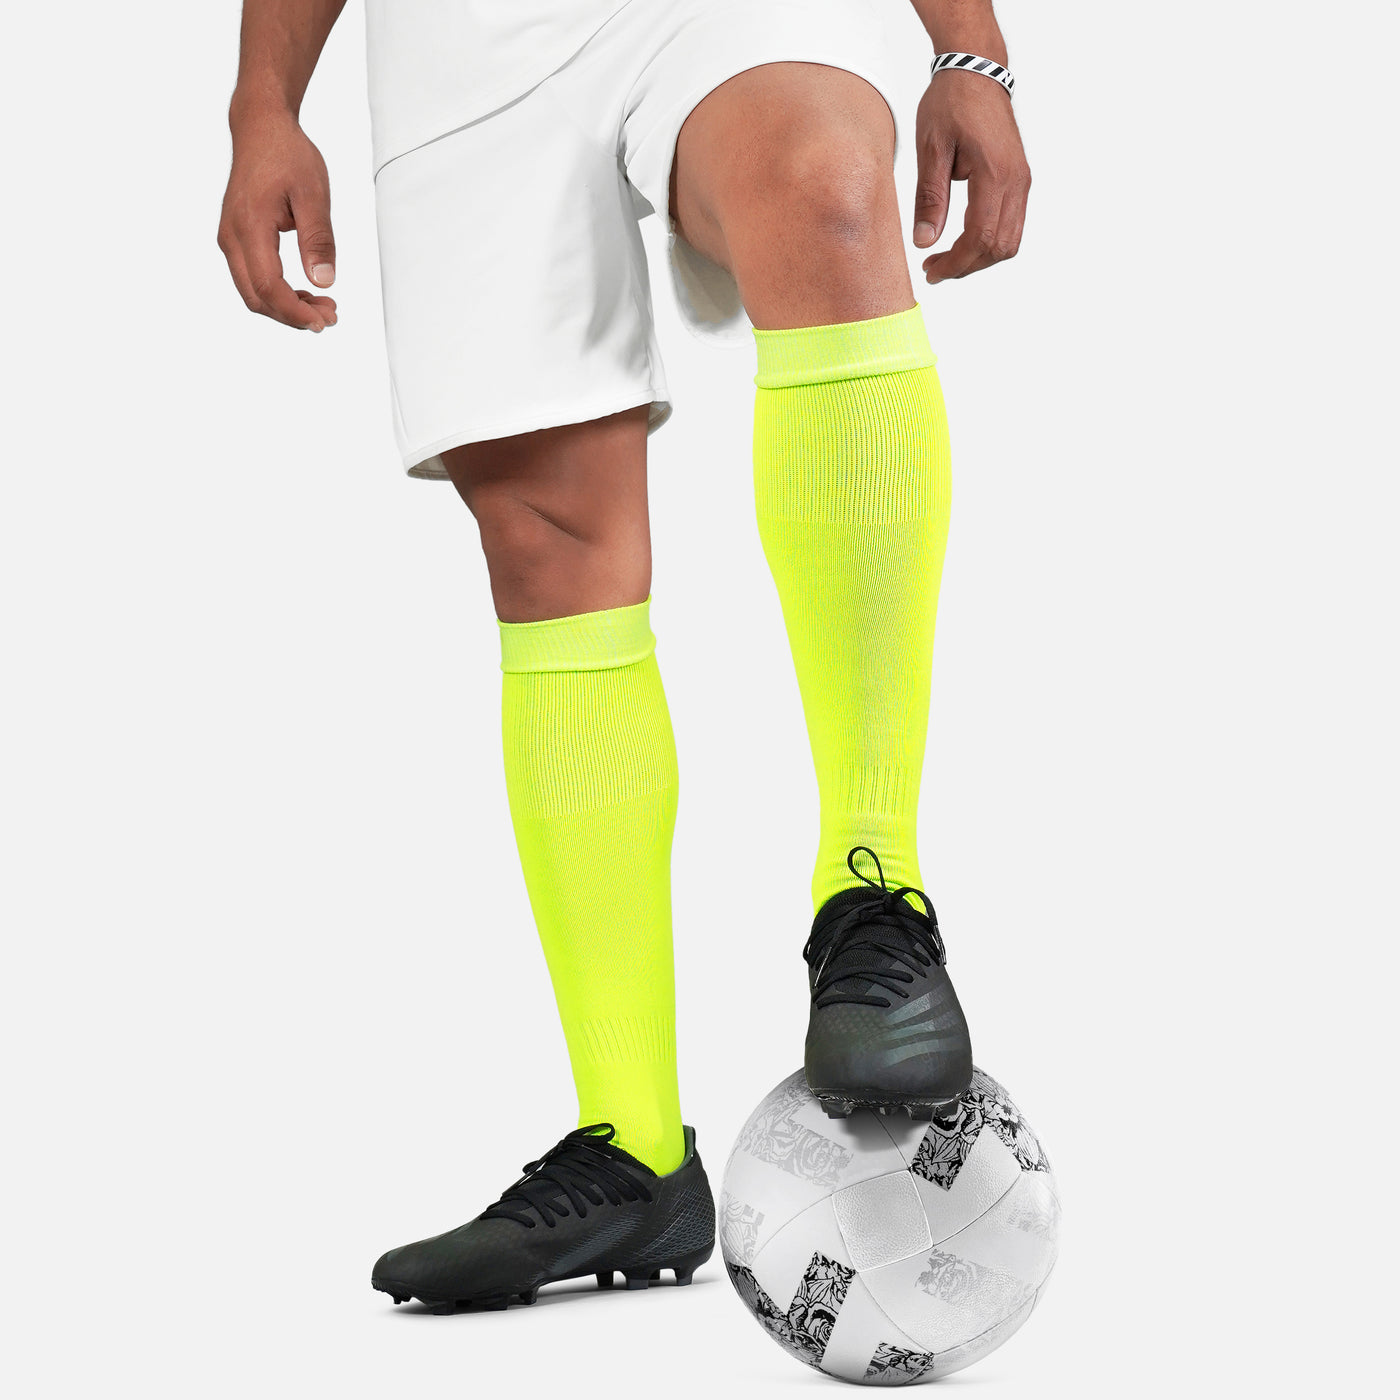 Safety Yellow Soccer Knee-High Socks